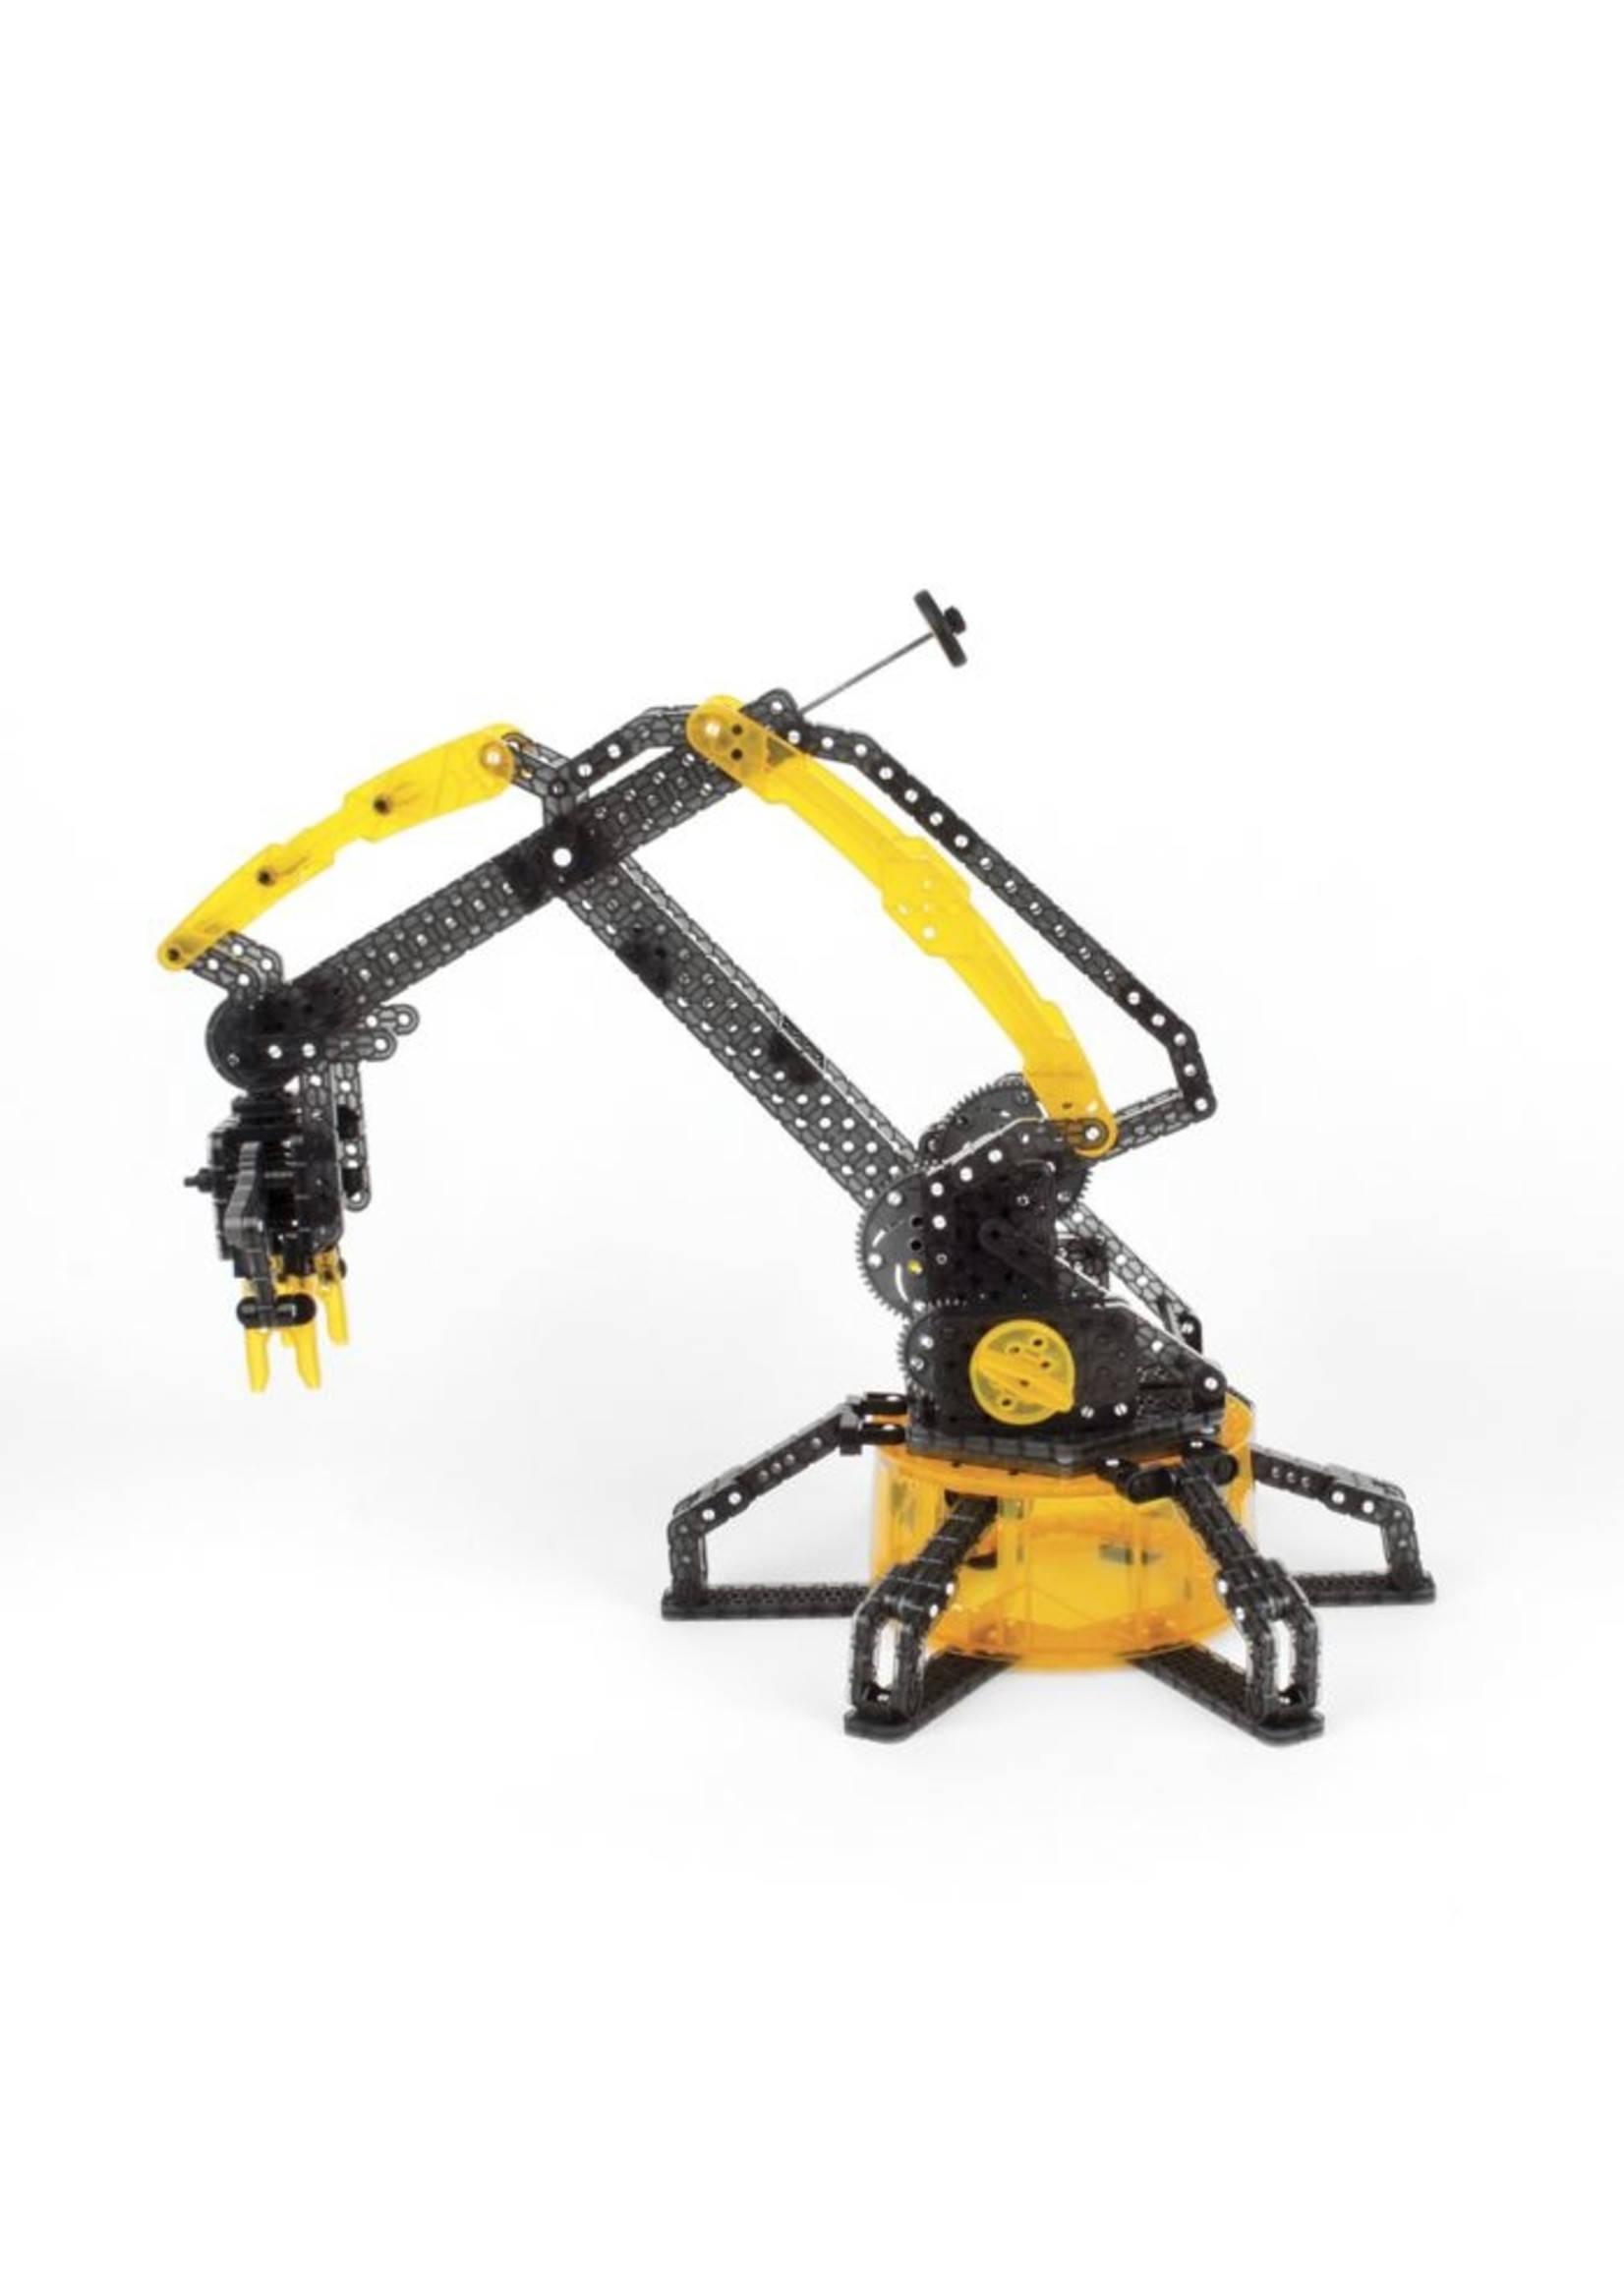 HEXBUG VEX Robotic Arm Kit